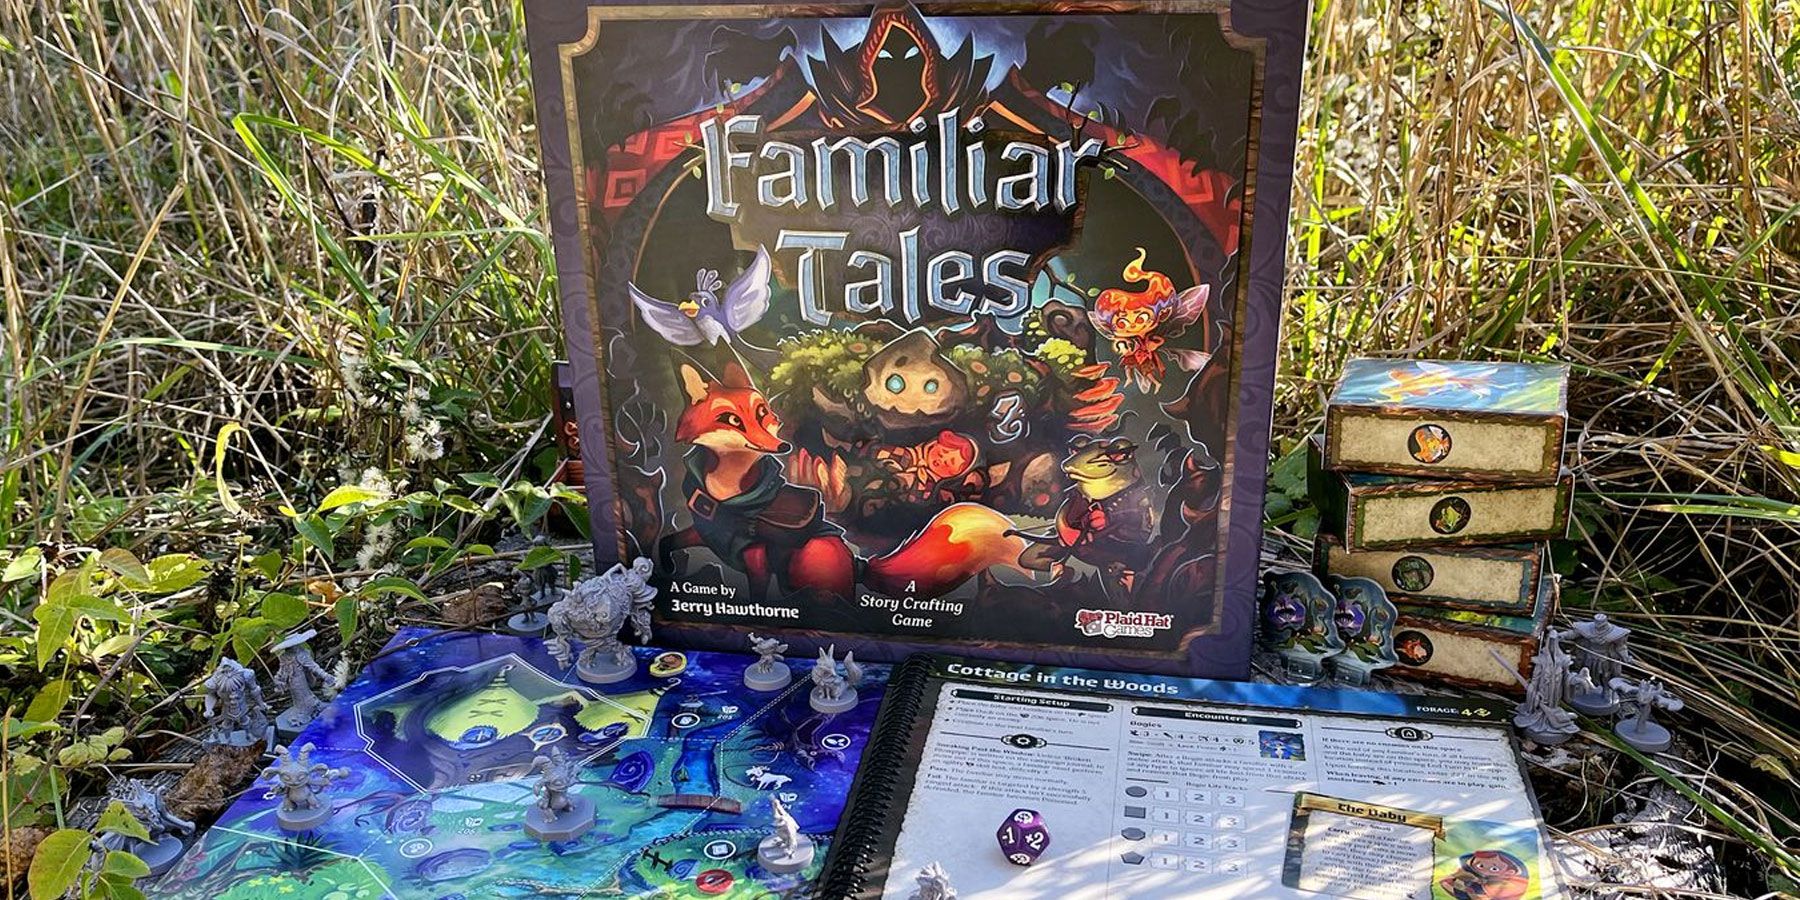 Familiar-Tales-Board-Game-sitting-in-grass